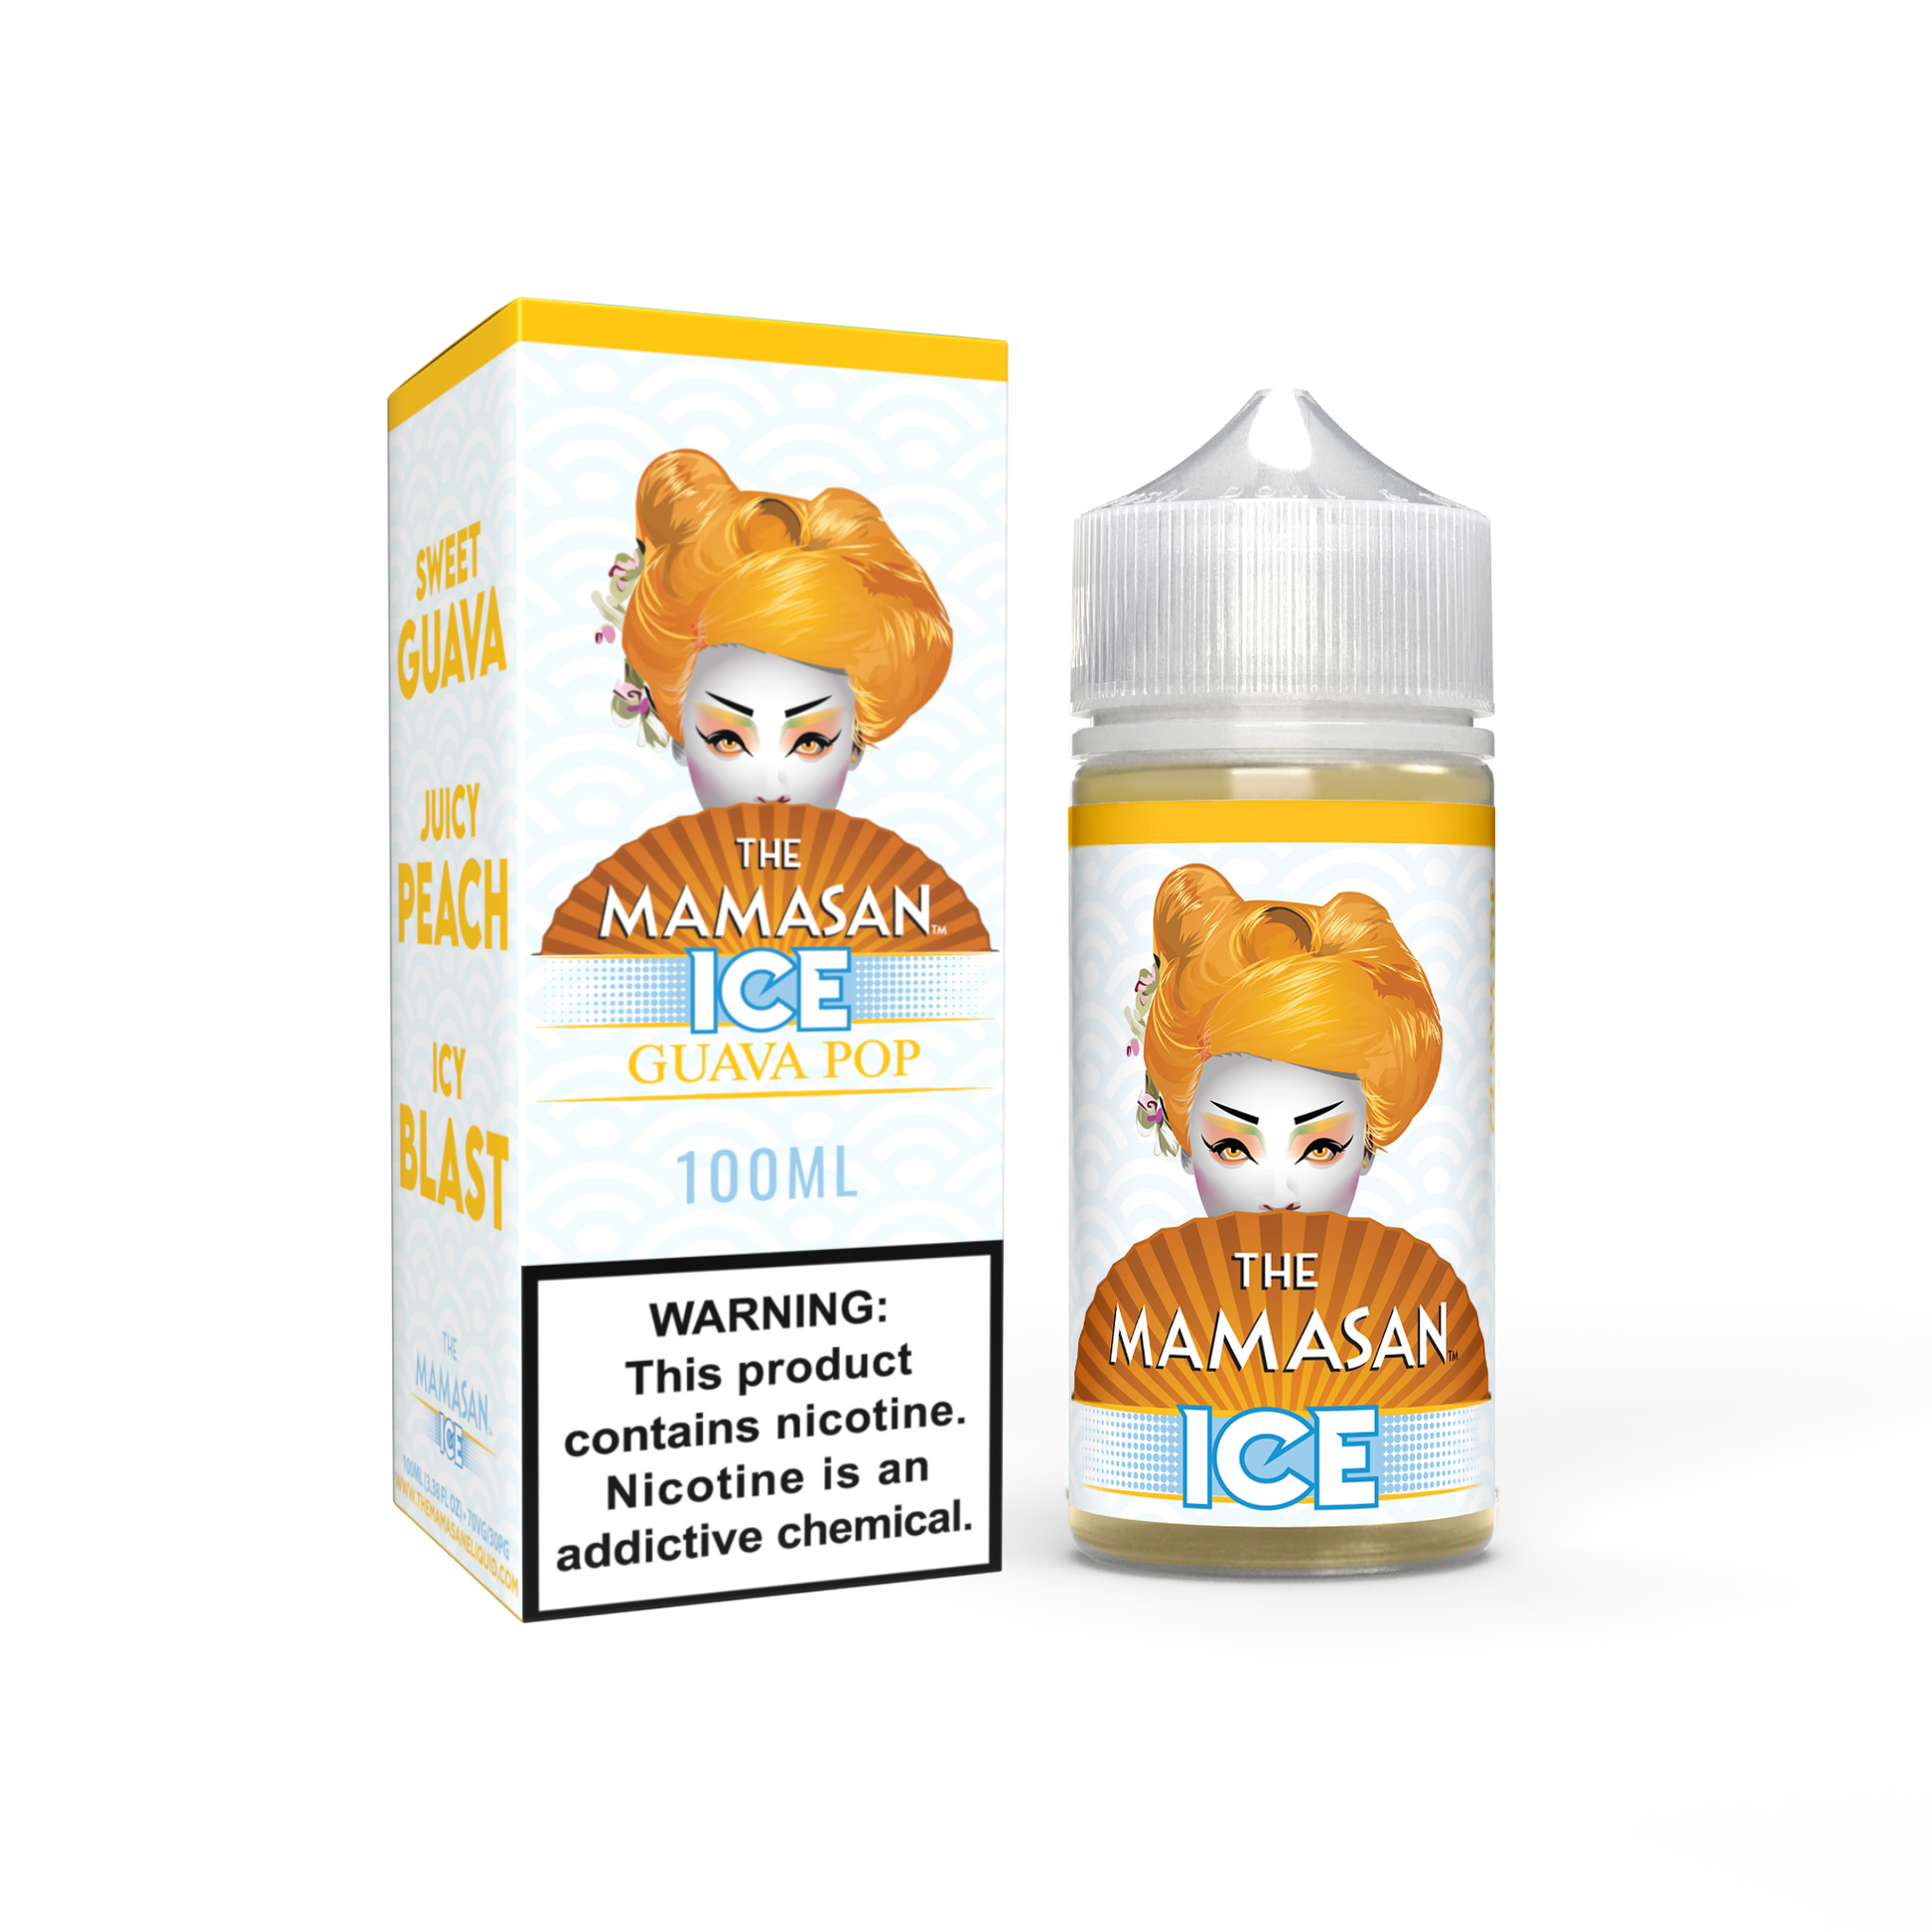 Mamasan guava pop ice 100ml vape juice